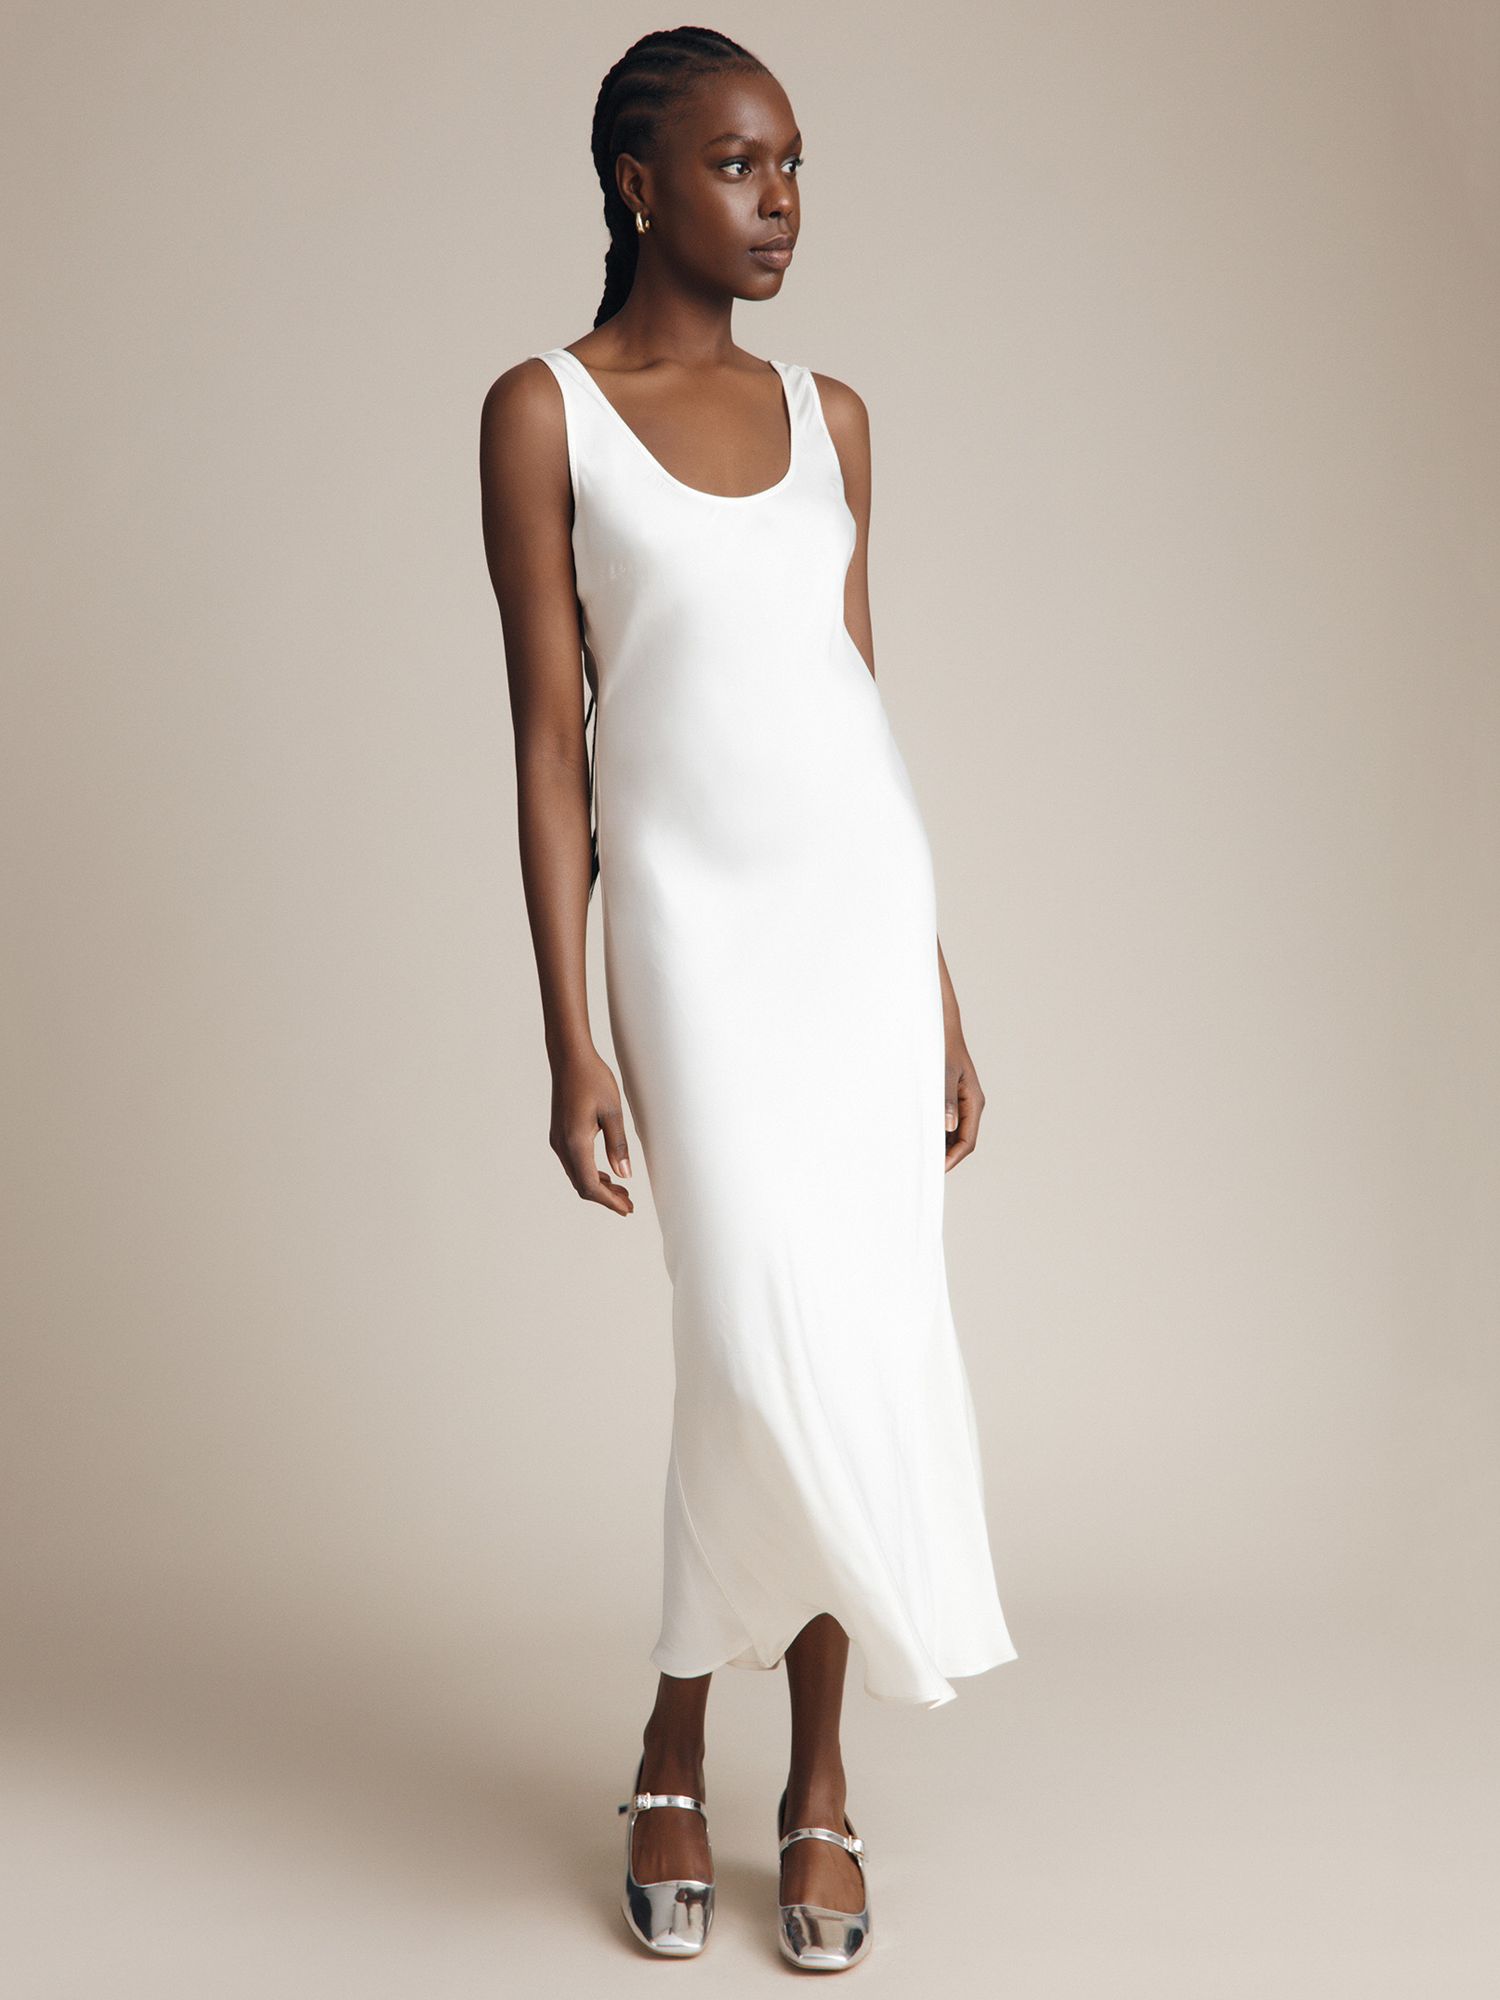 Ghost Palm Bias Cut Satin Slip Dress, Ivory at John Lewis & Partners